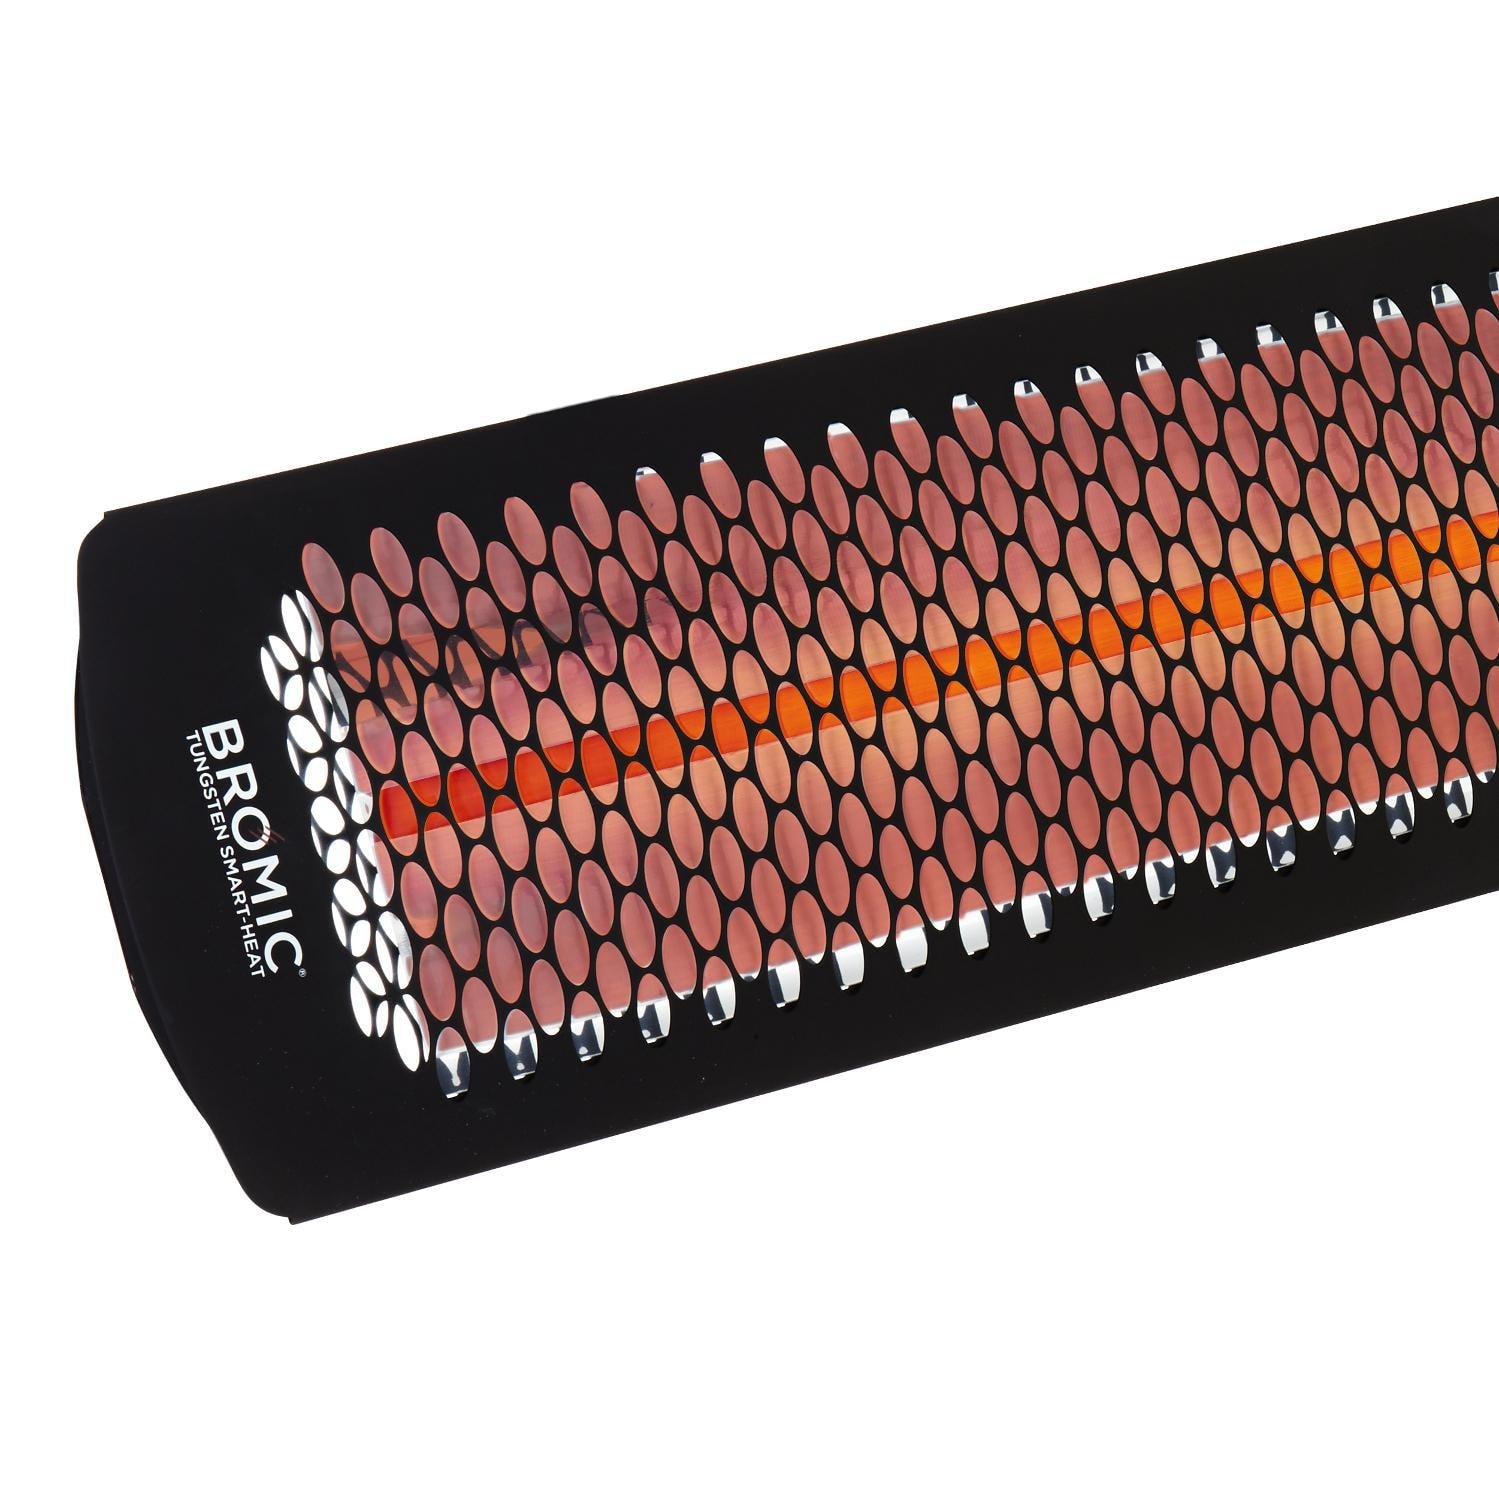 Bromic Heating - Tungsten Smart-Heat 44-Inch 2000W Single Element 240V Electric Infrared Patio Heater - Black